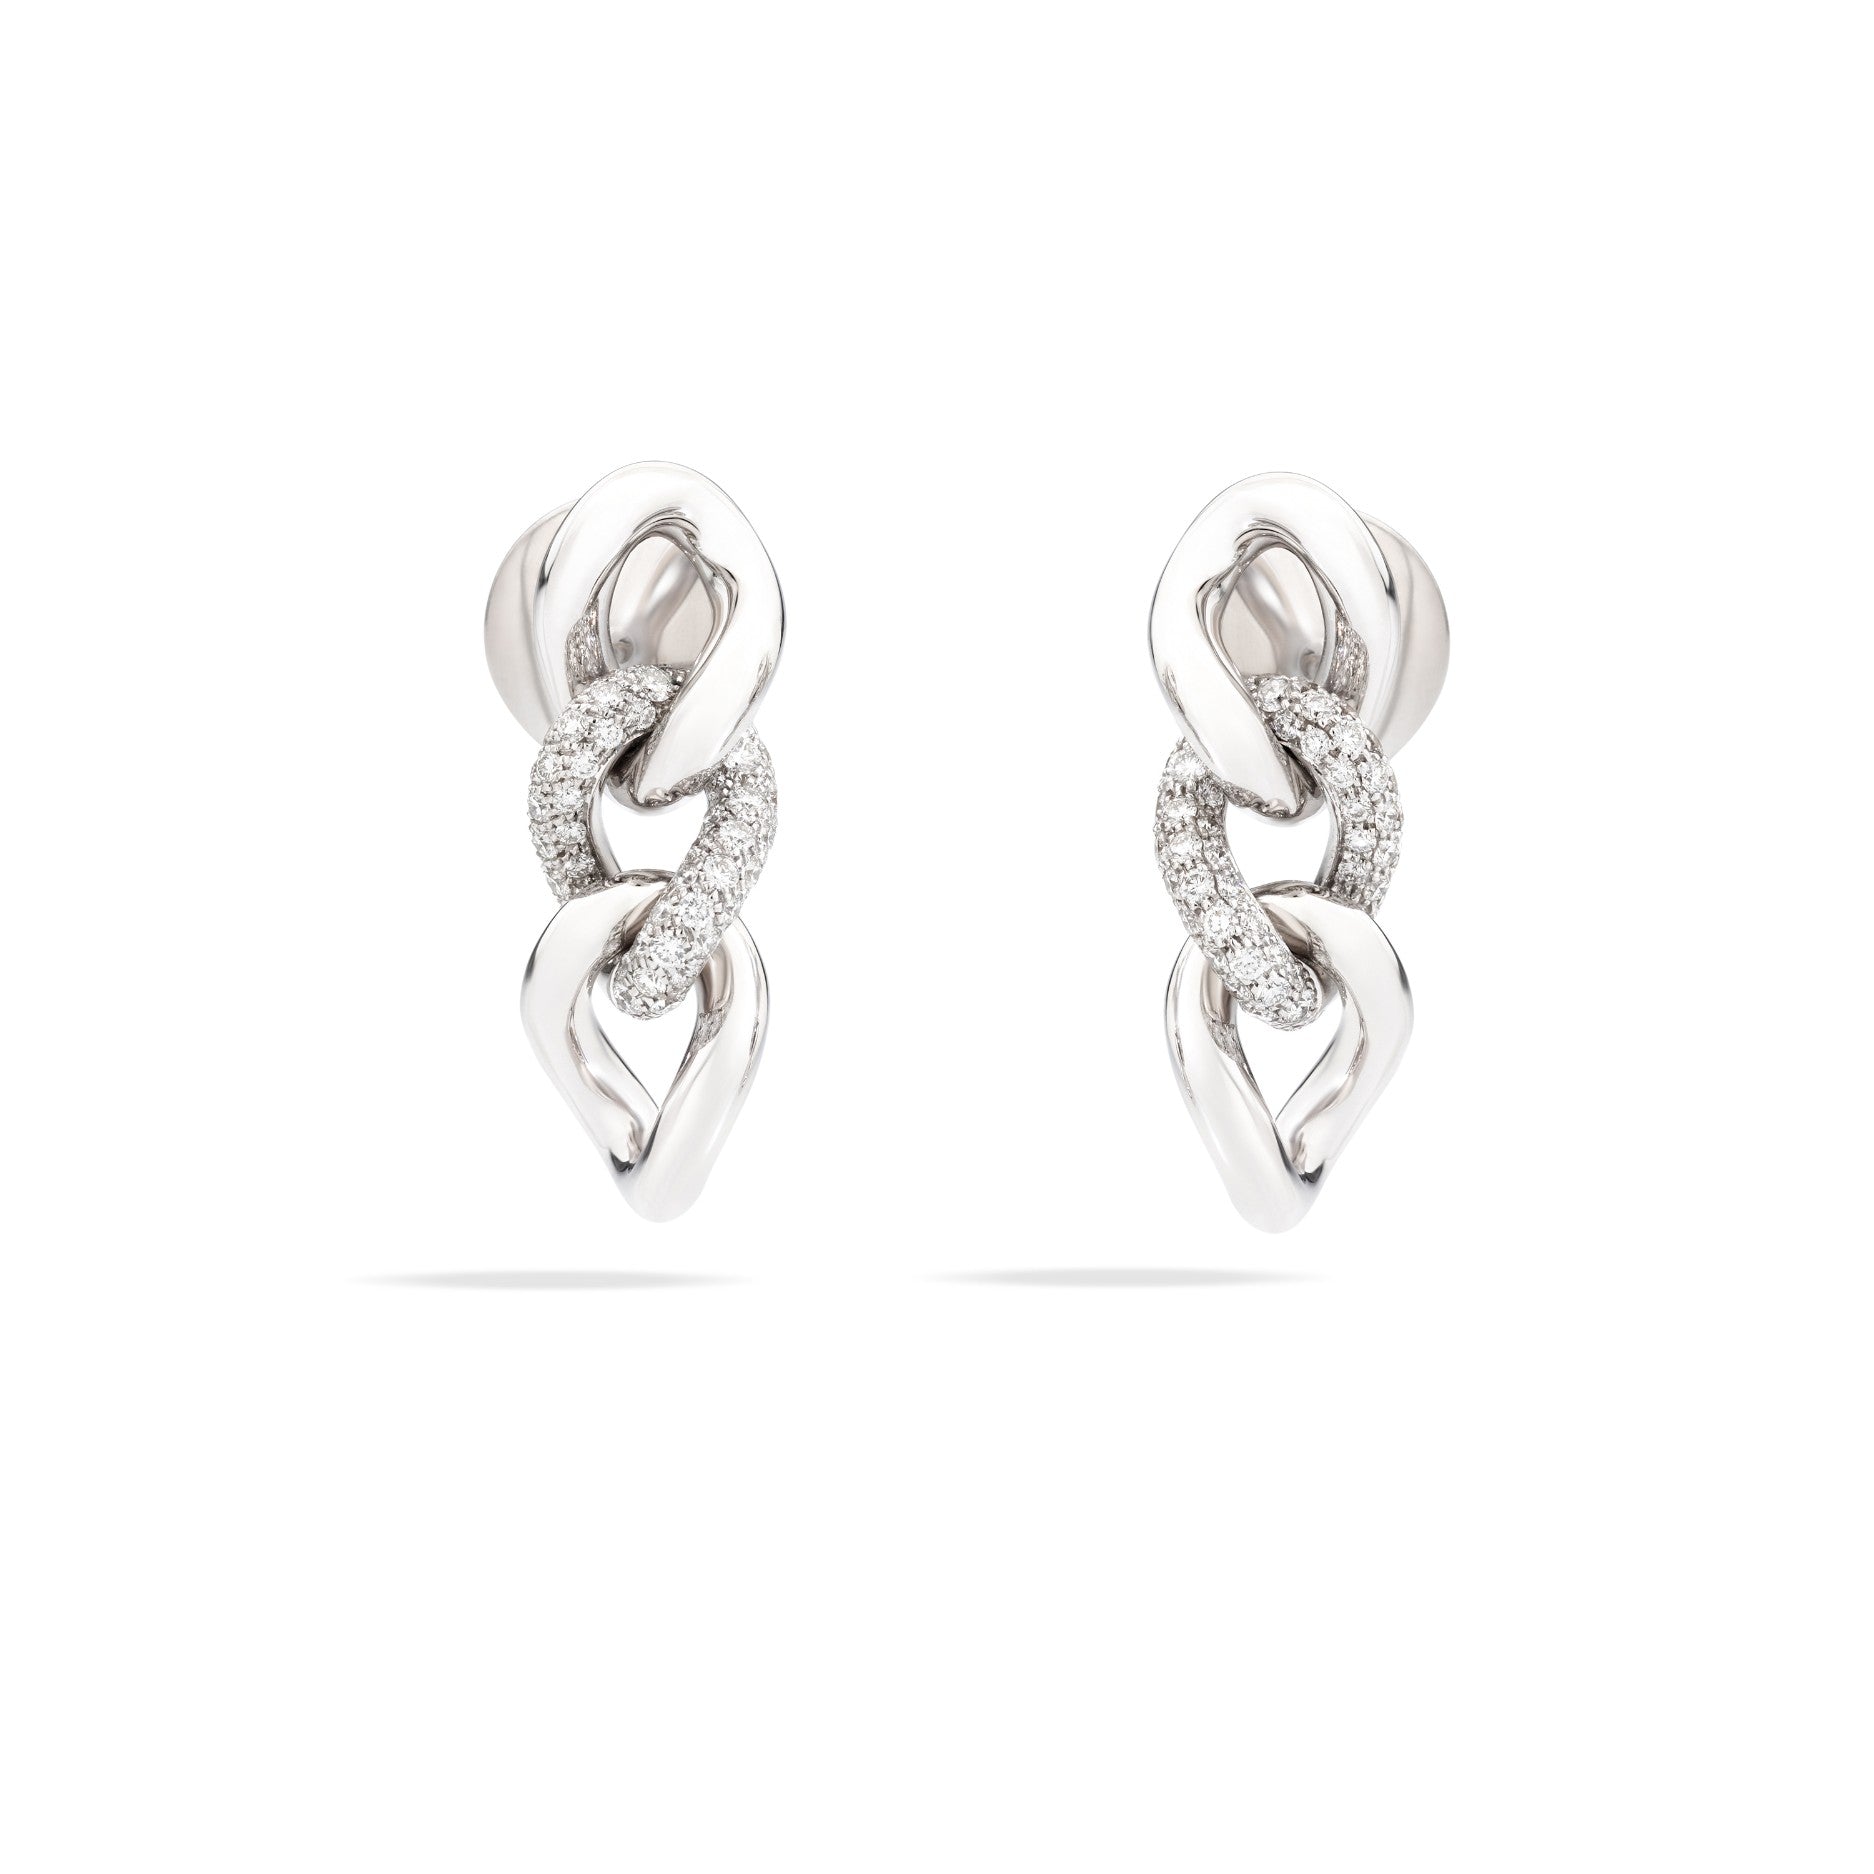 Pomellato Tango Earrings in 18k White Gold with Diamonds - Orsini Jewellers NZ